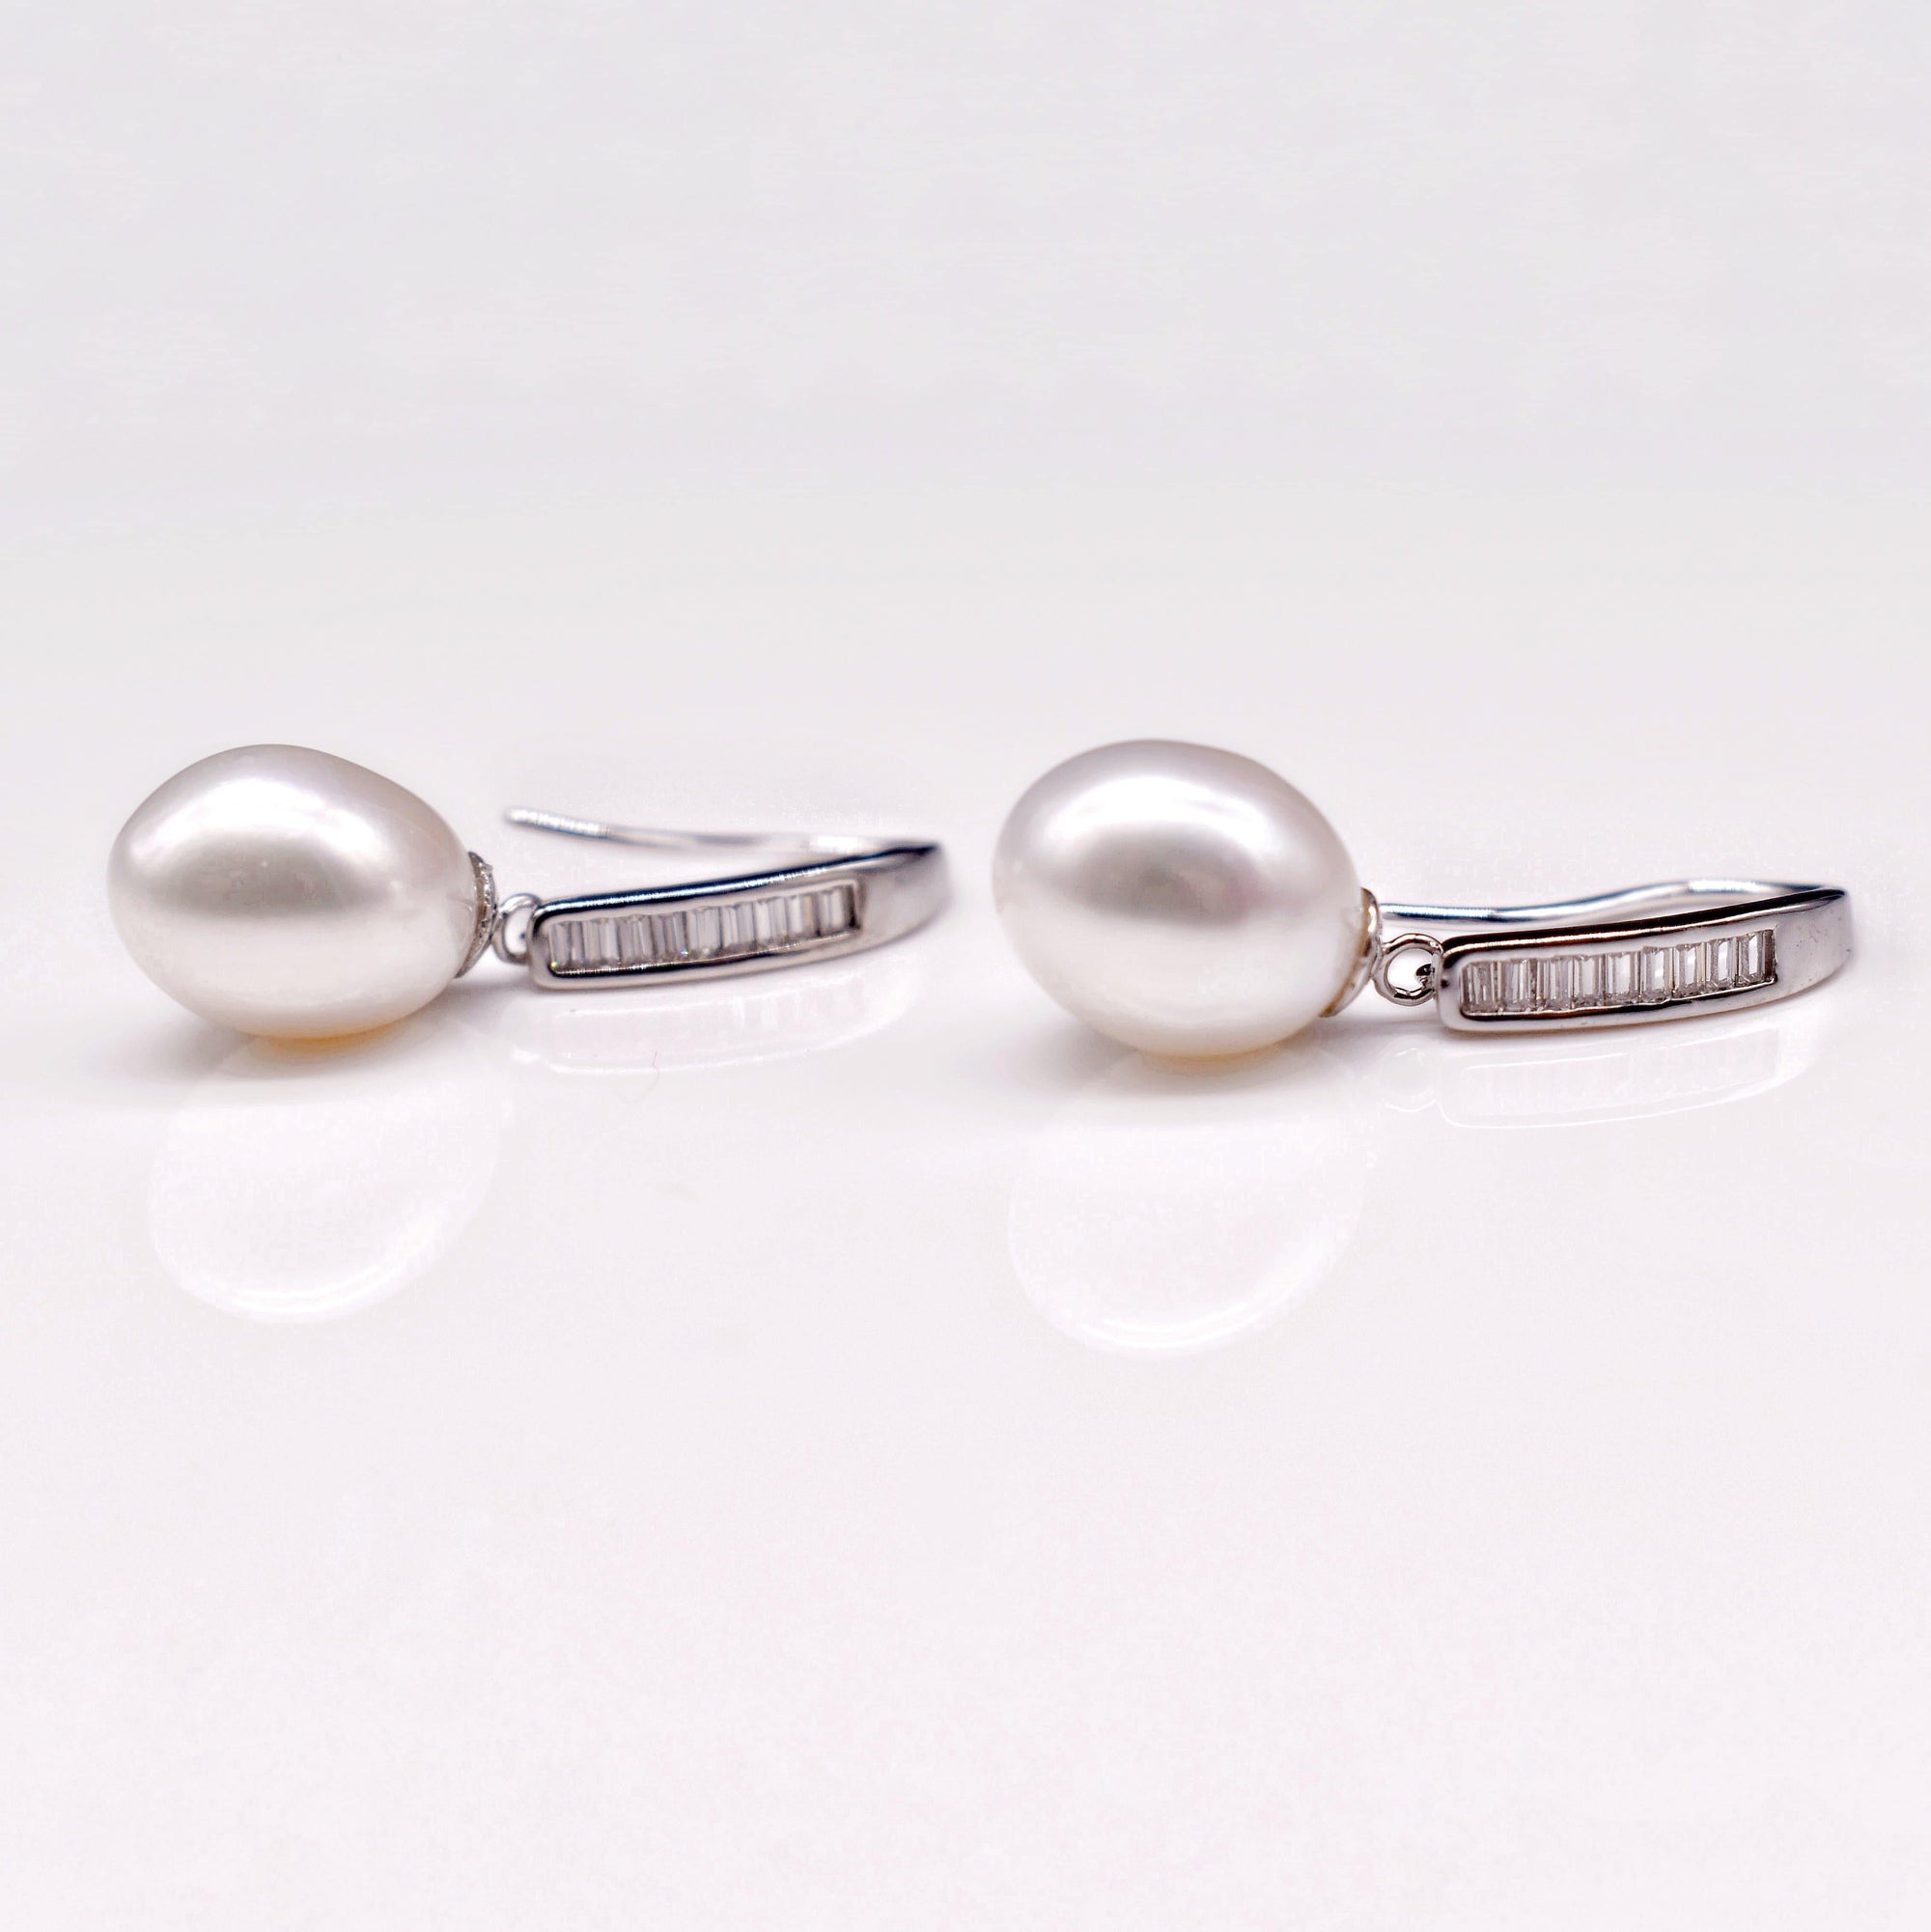 Freshwater Pearl Earrings - Patina - Akuna Pearls